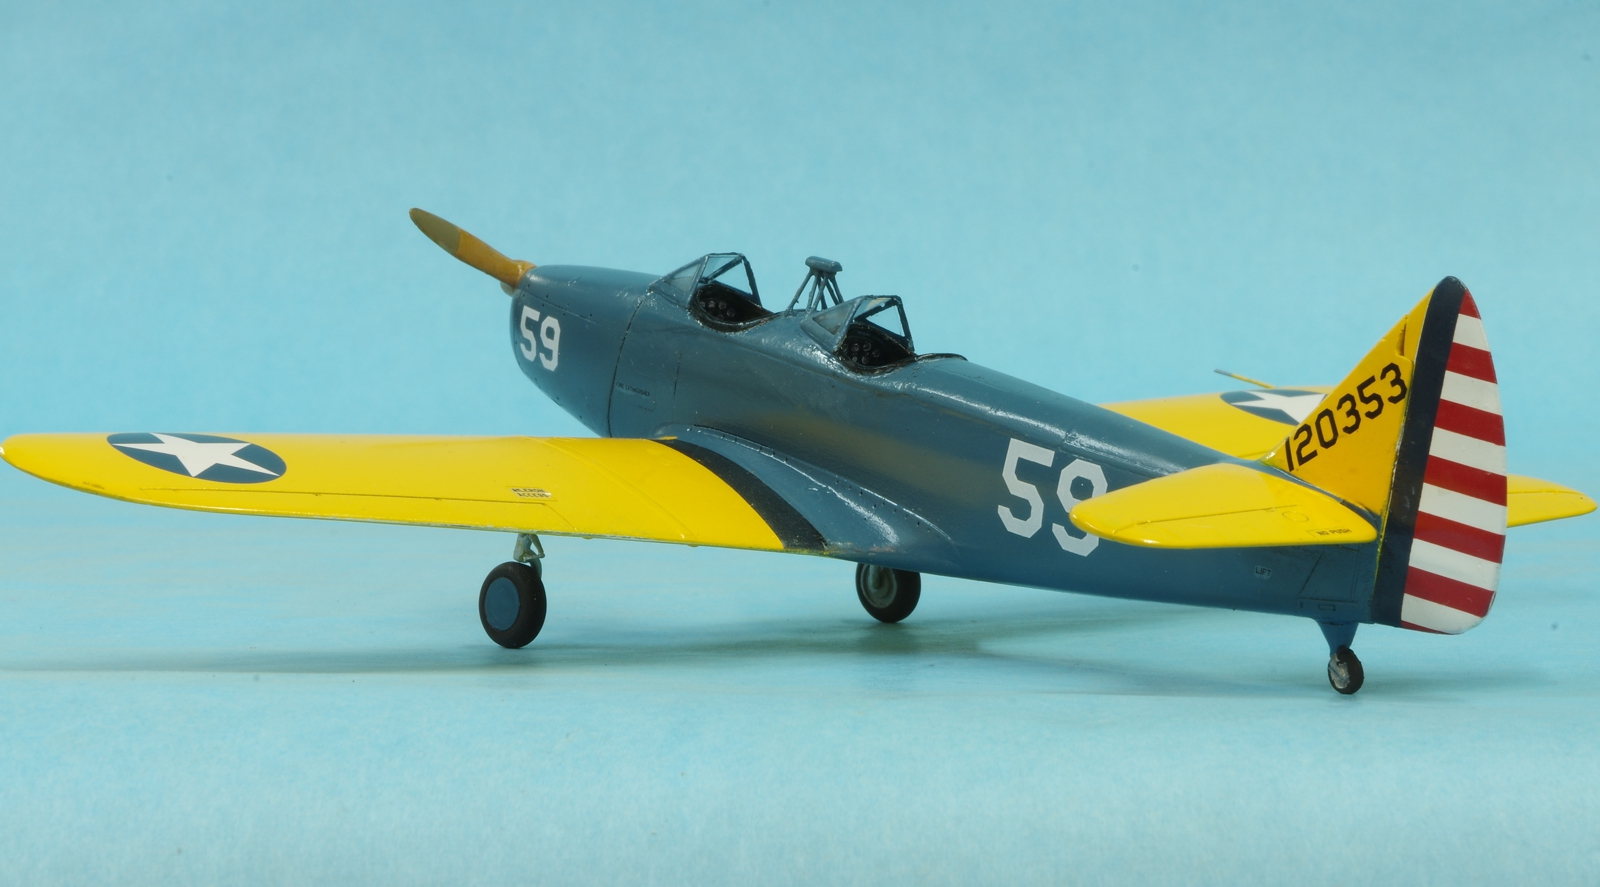 pt 19 airplane models